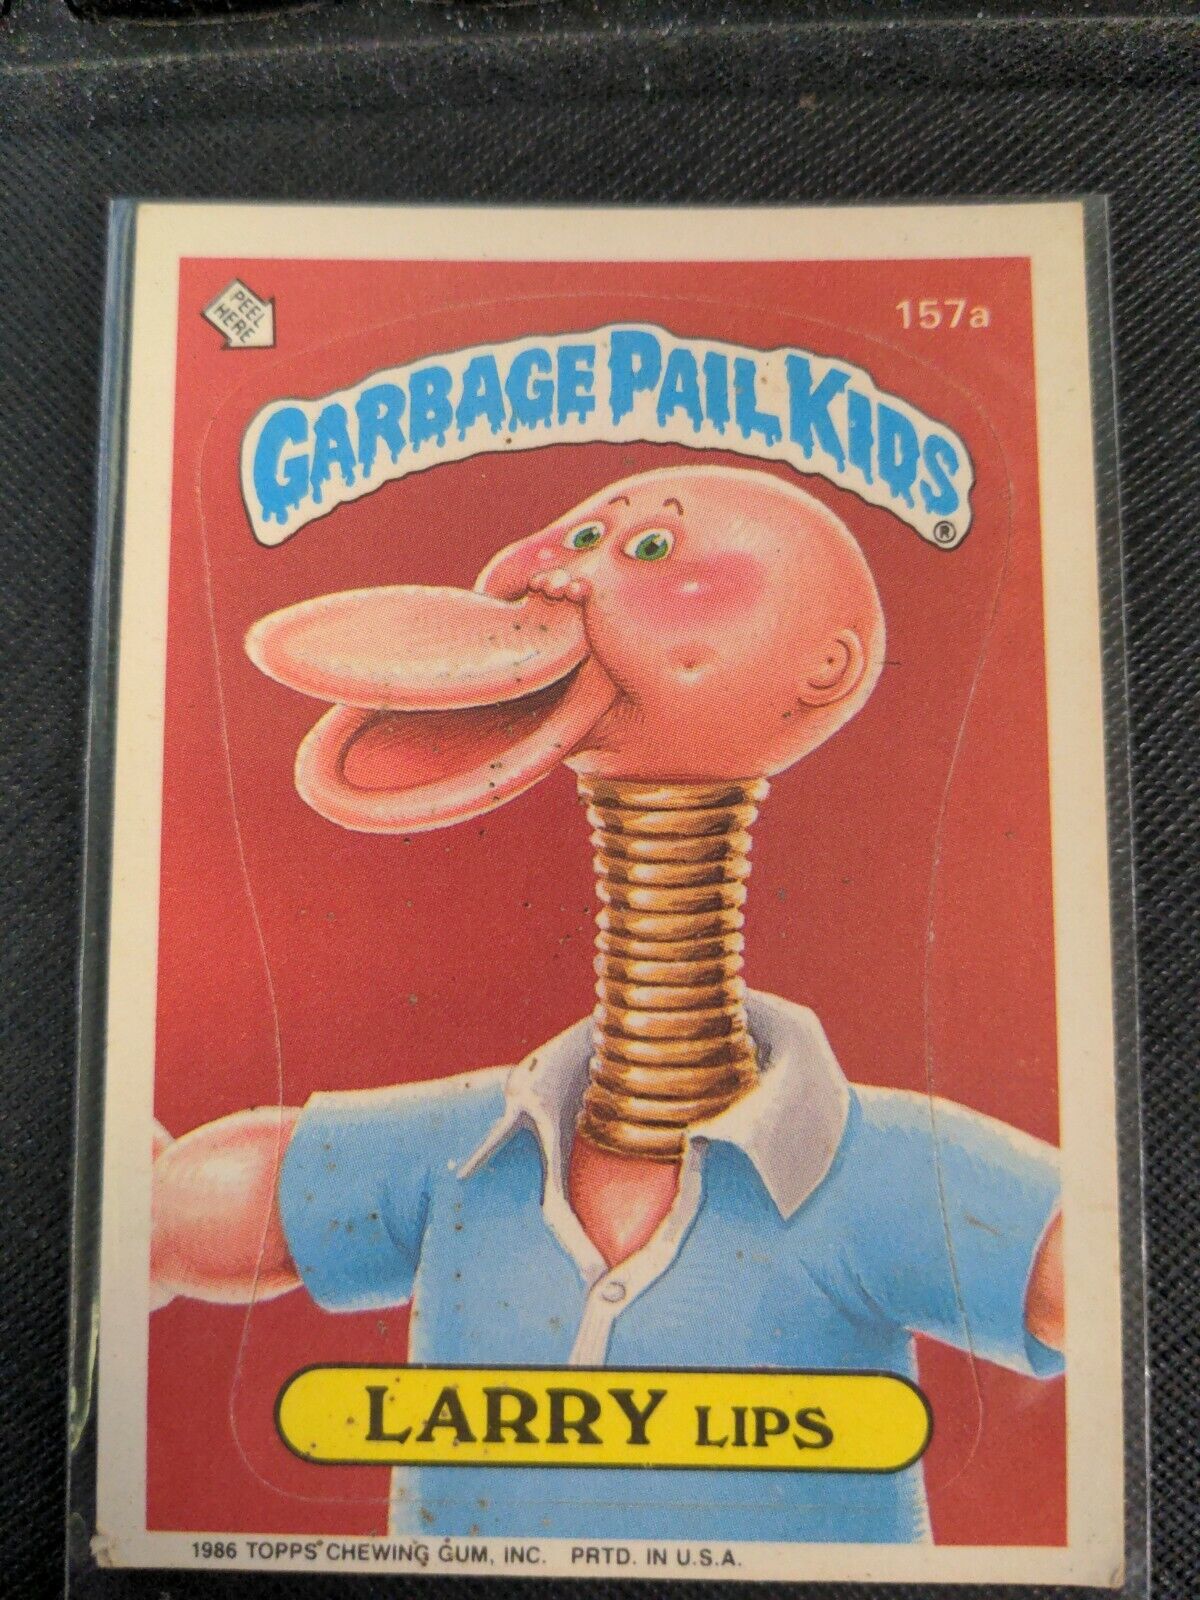 1986 Garbage Pail Kids LARRY Lips Series 4 GPK Vintage Sticker Card 157a